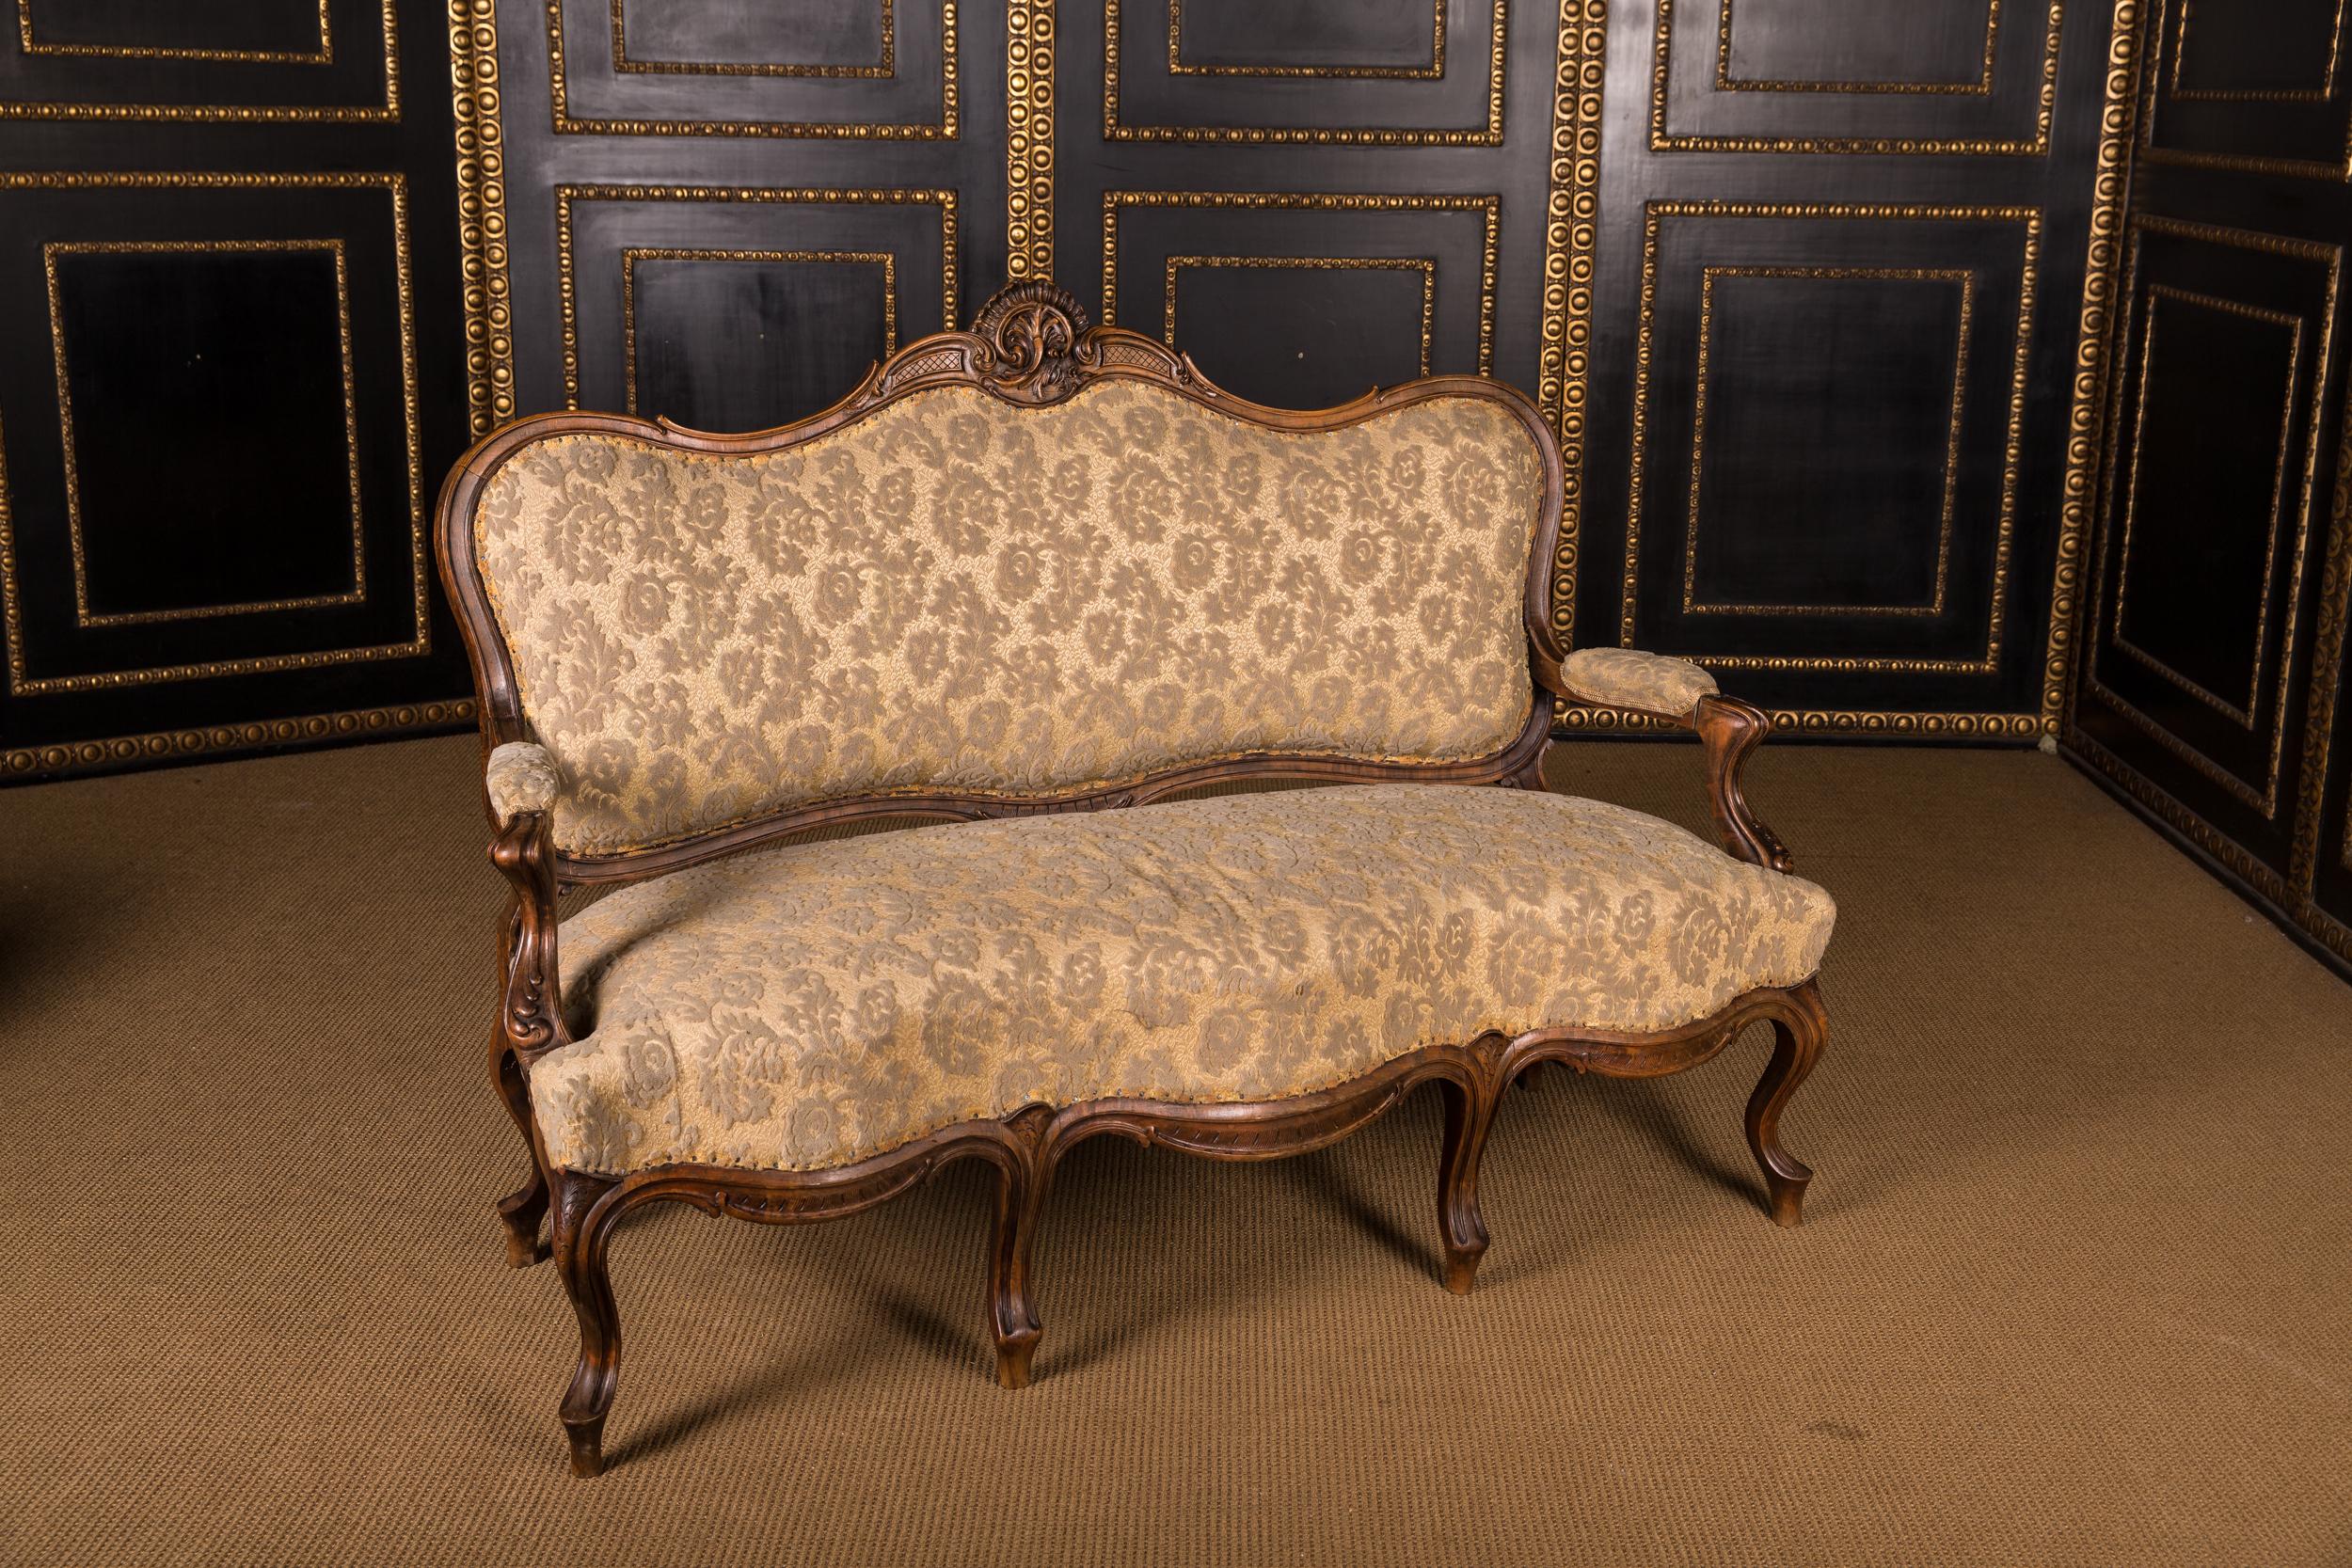 Castle Worthy Salon Group Sofa and Chairs Neo Rococo, circa 1860 (Rokoko)